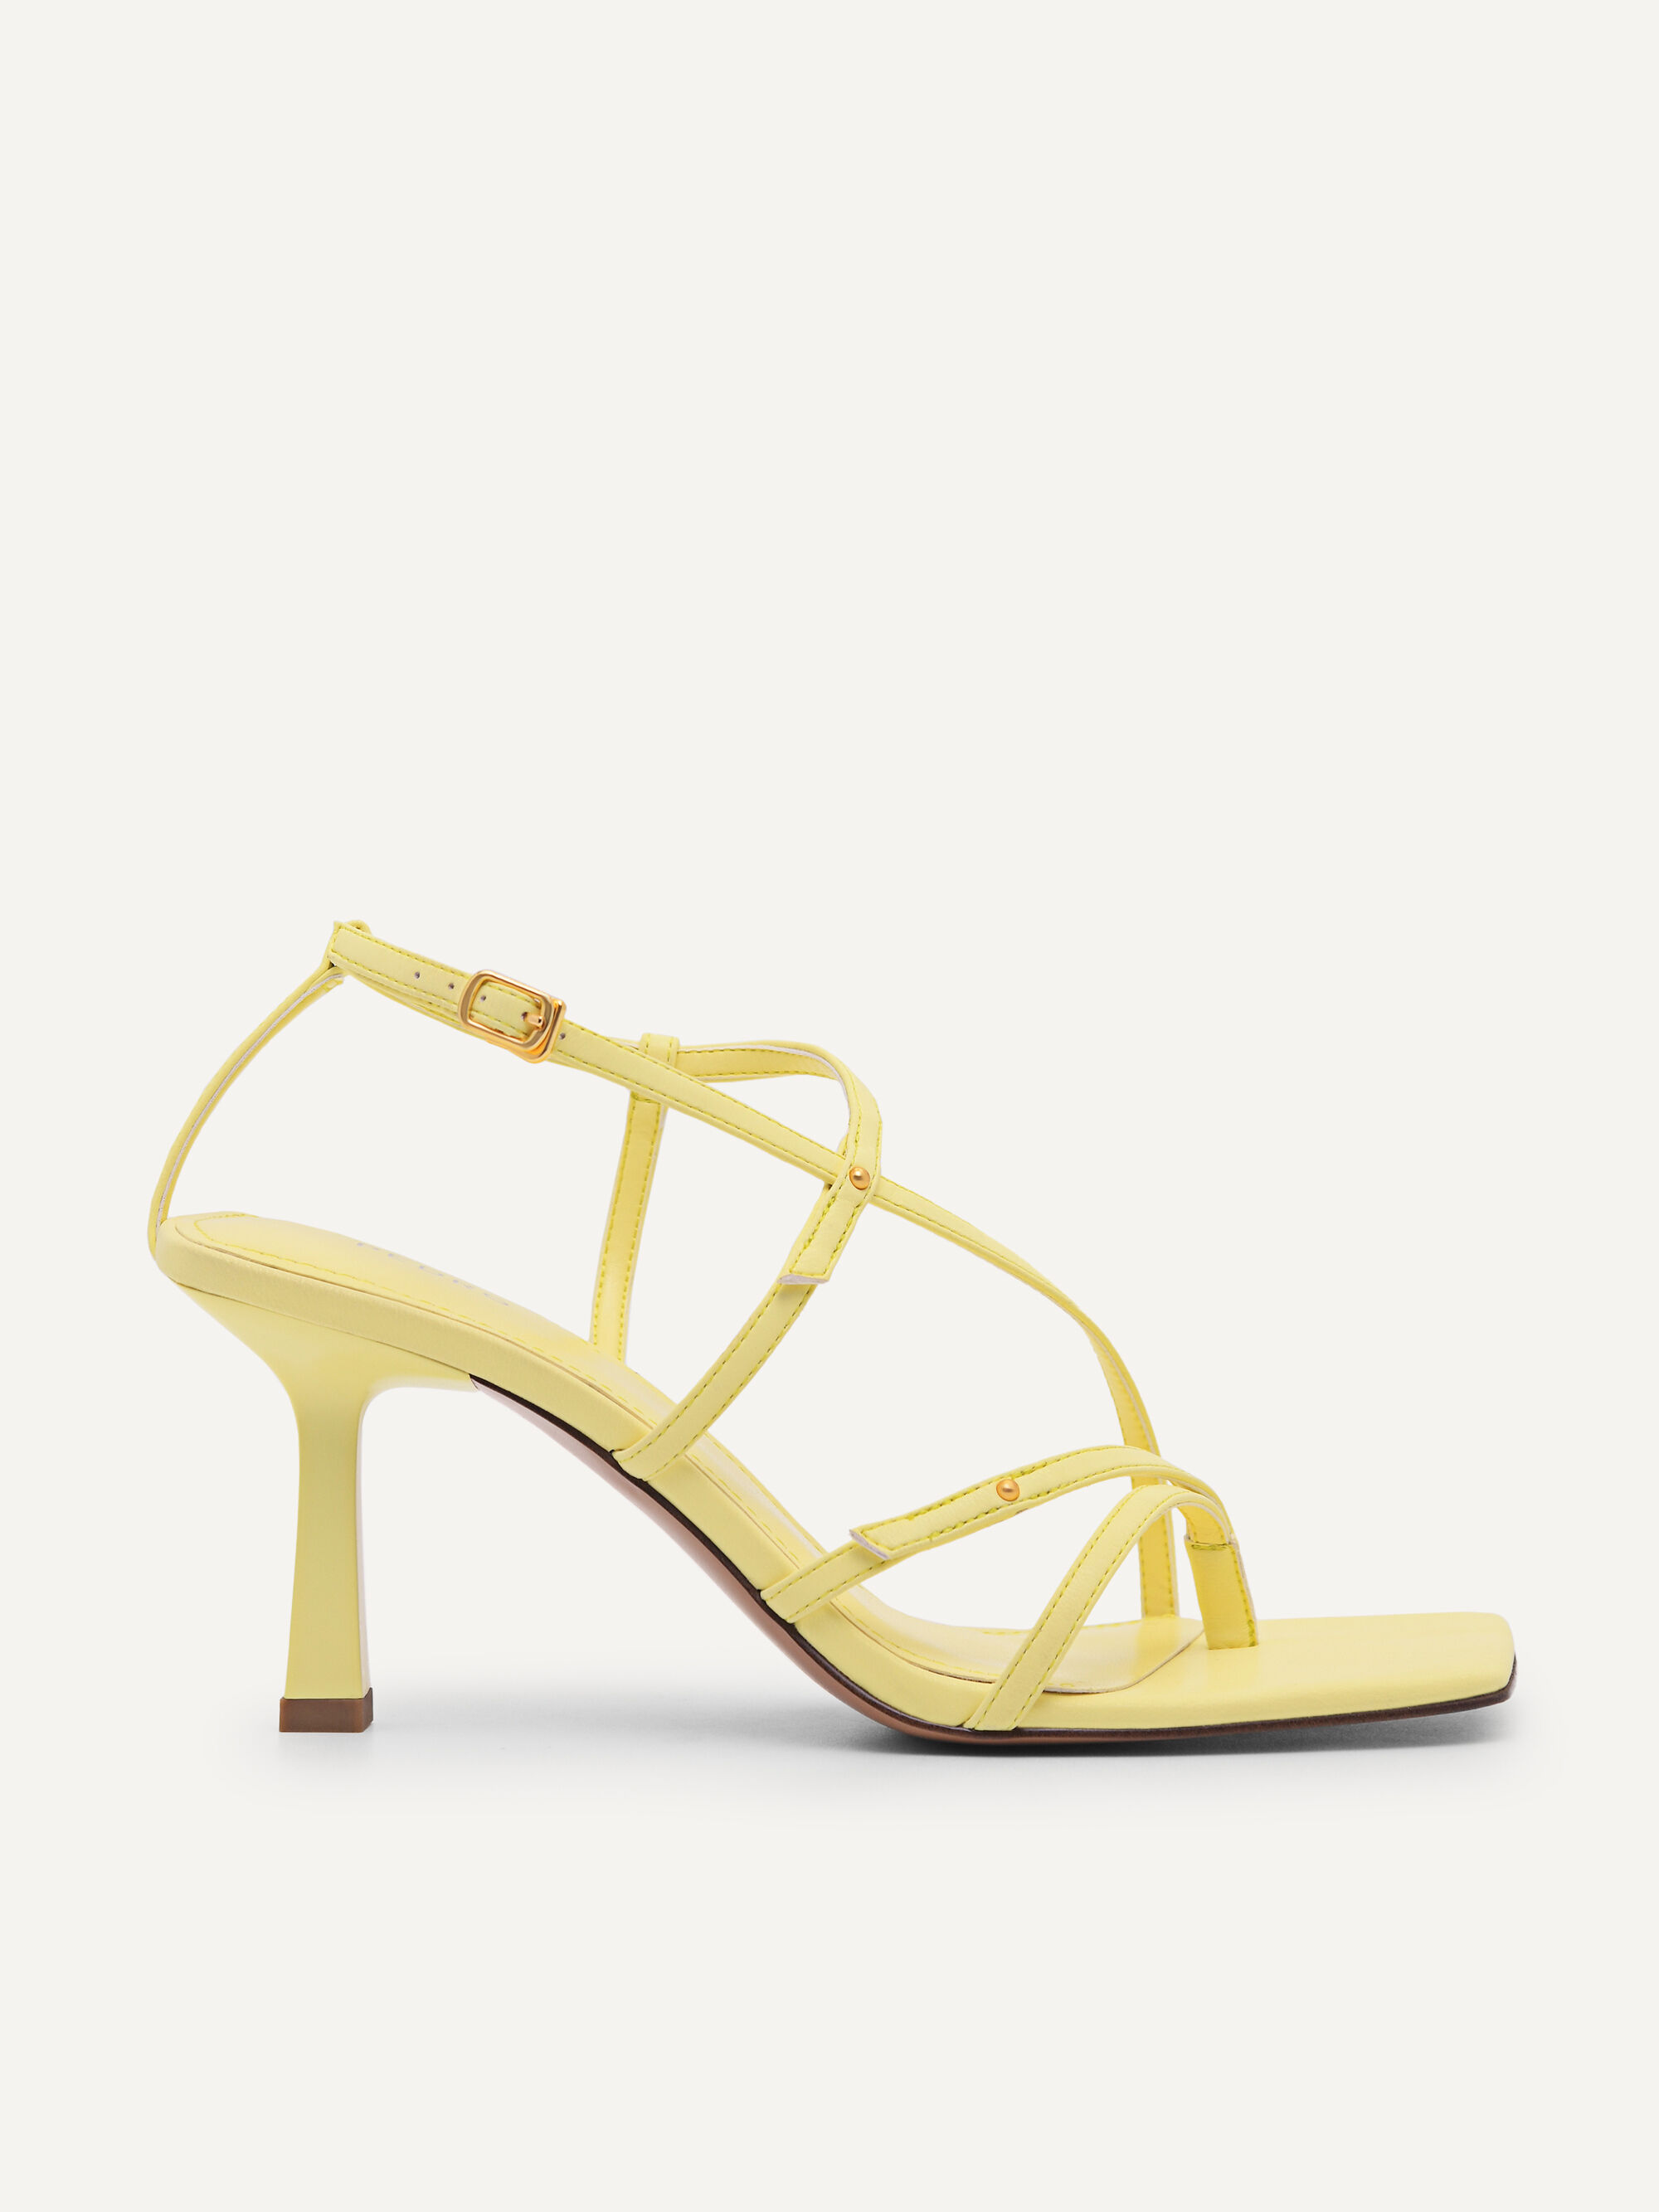 heeled sandals yellow